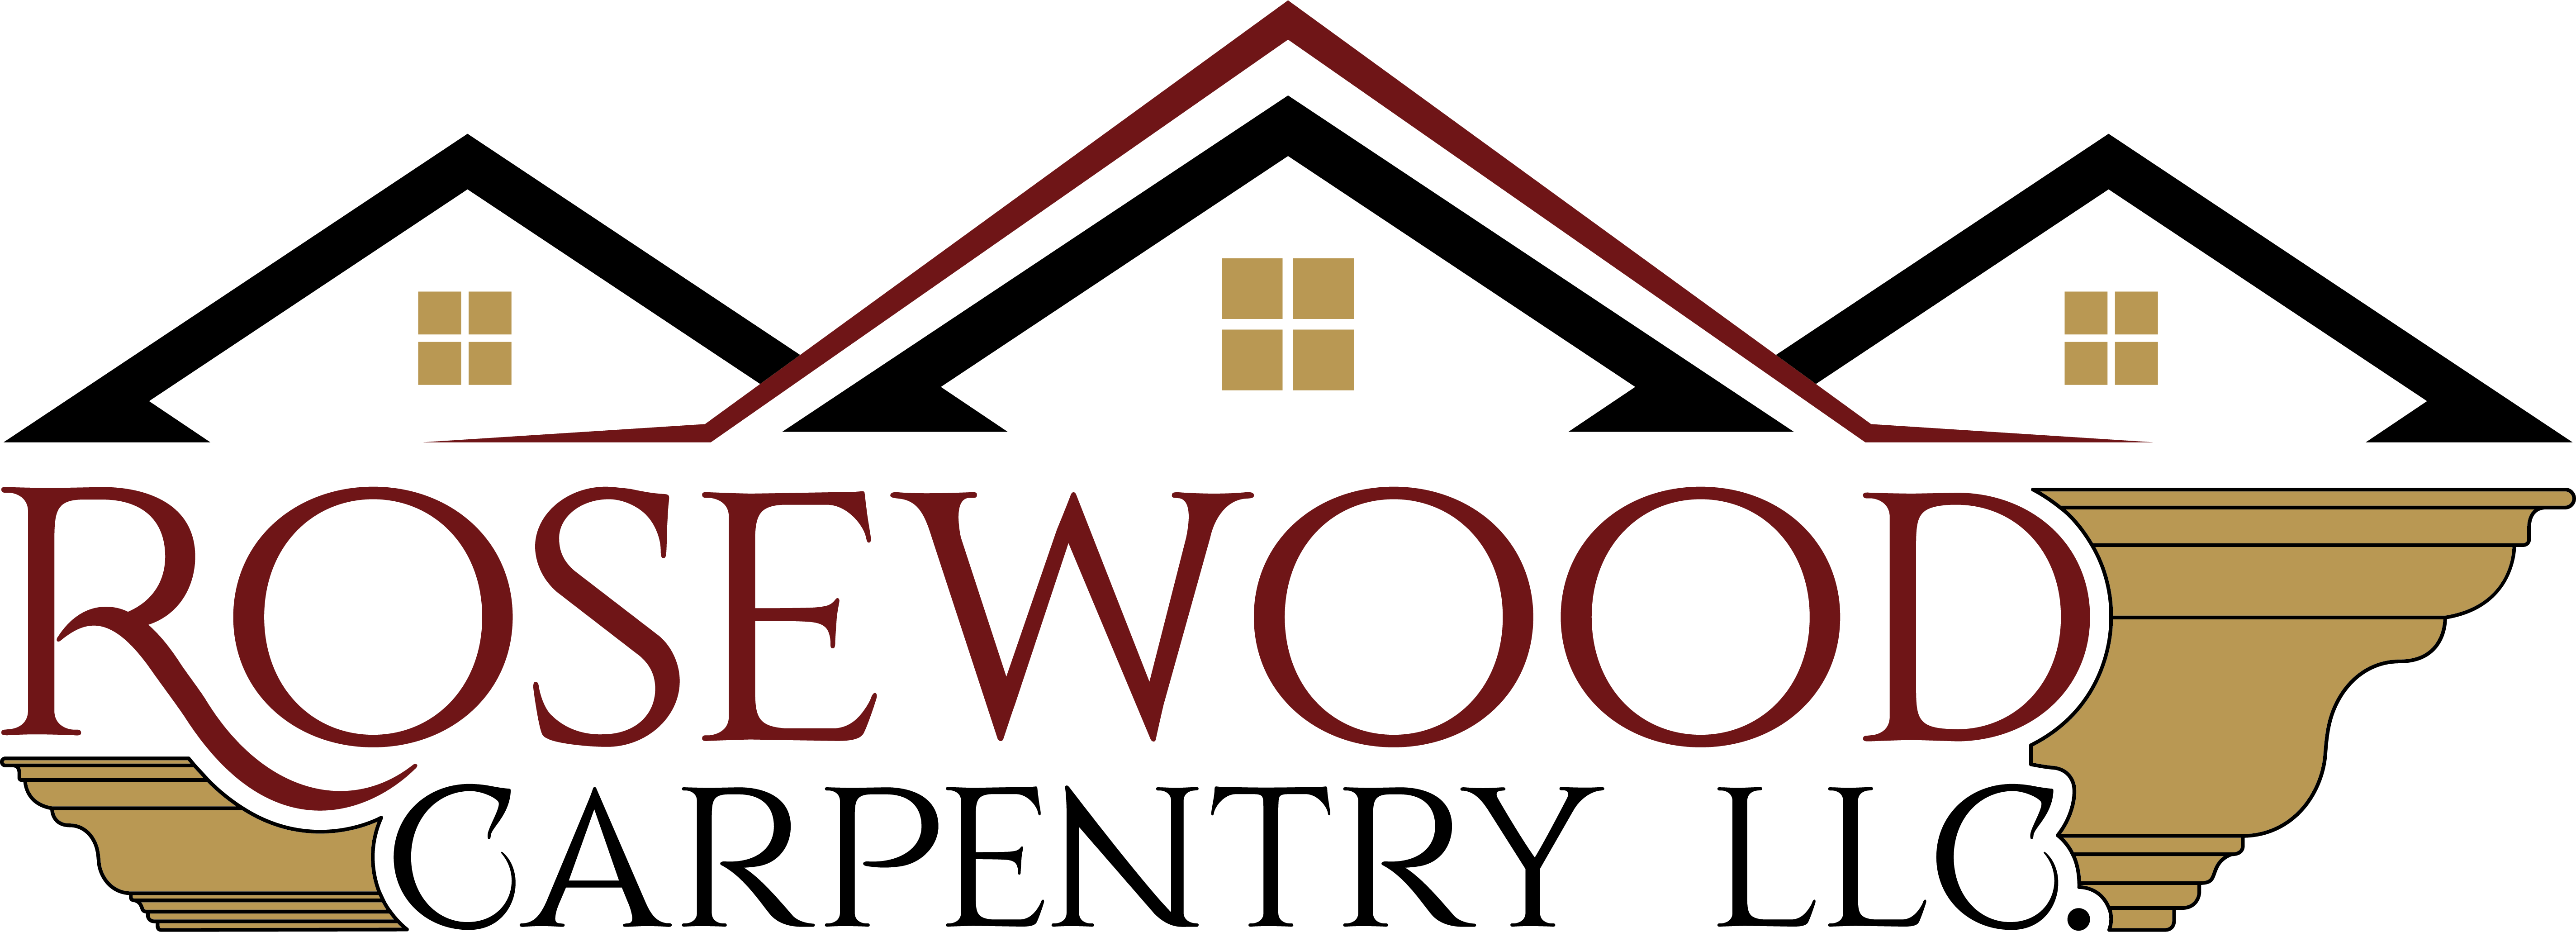 Rosewood Carpentry LLC. logo